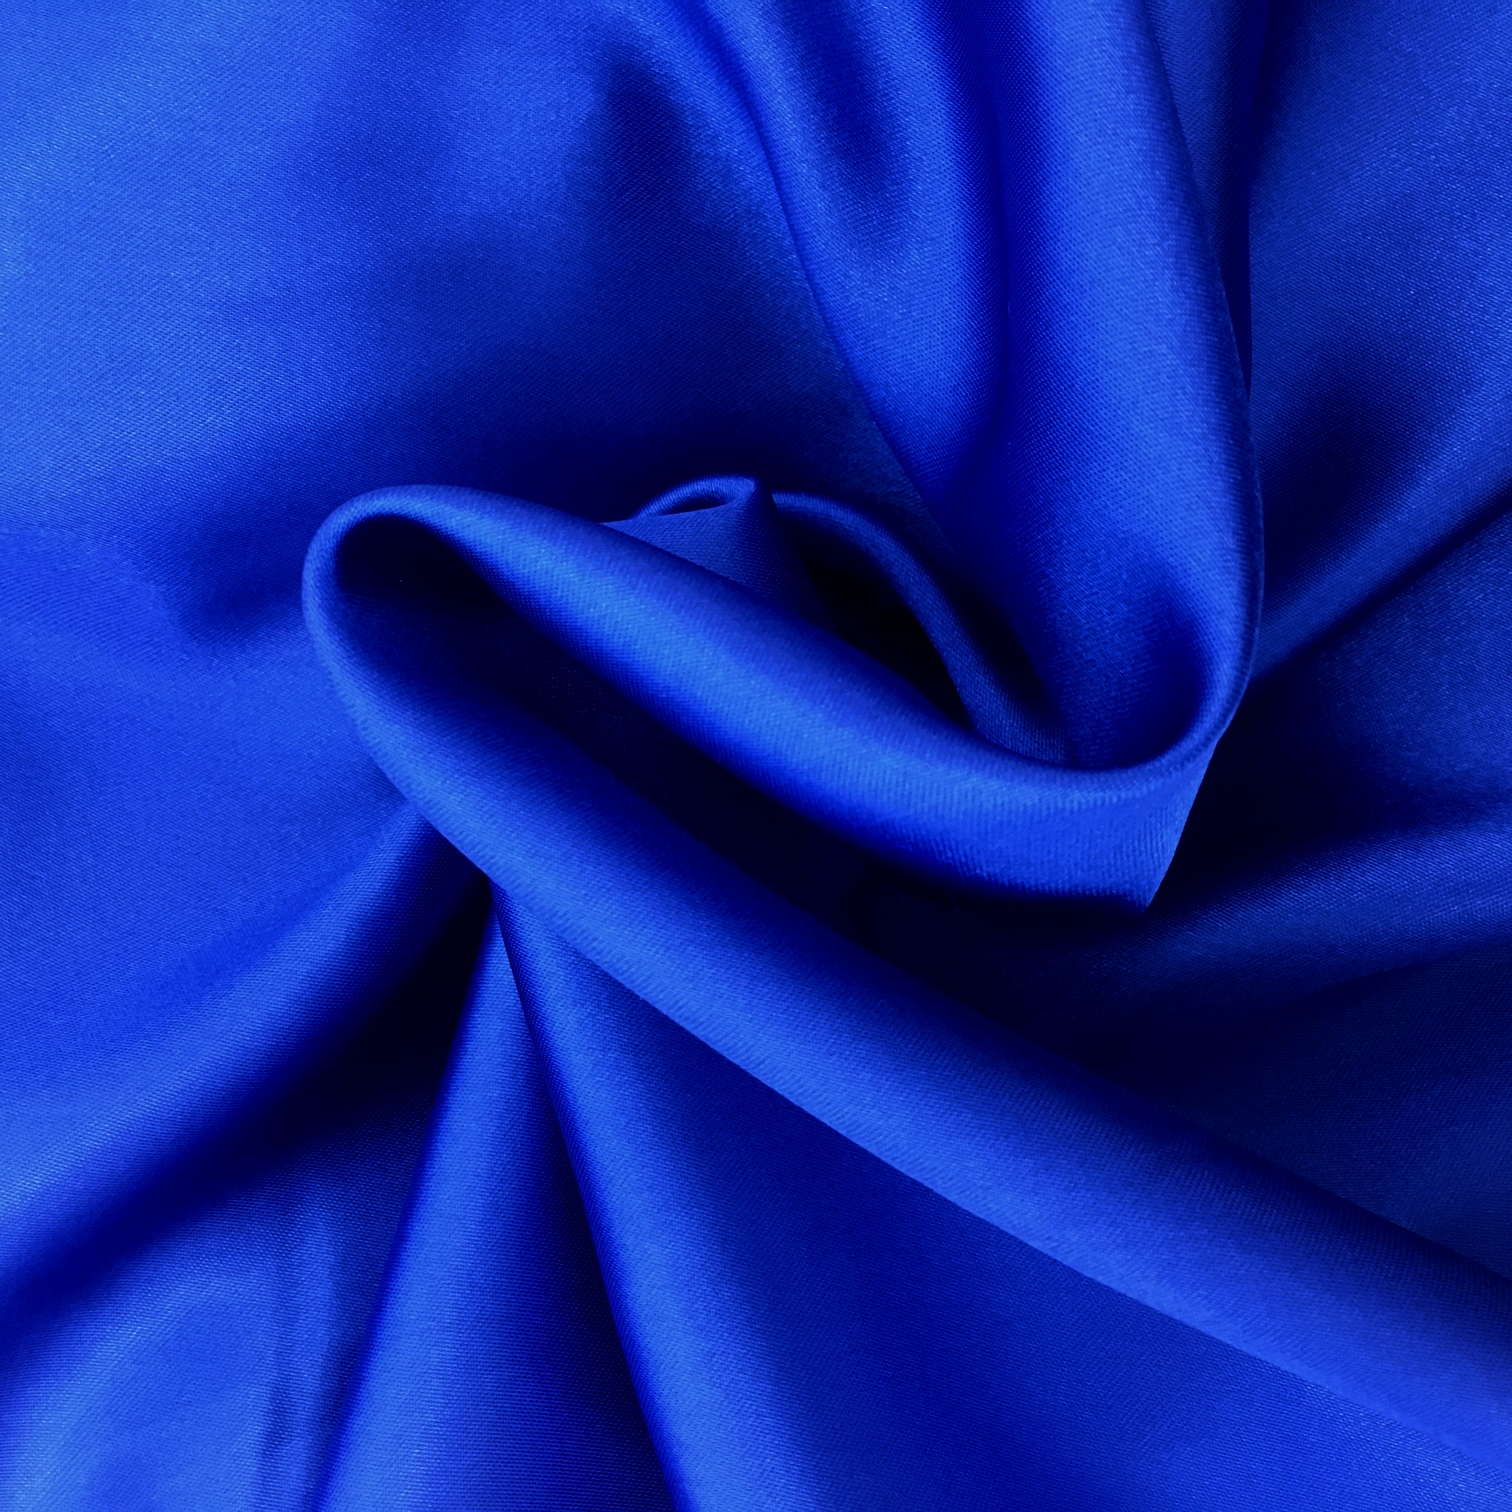 20 metres of Polyester Satin - Royal Blue